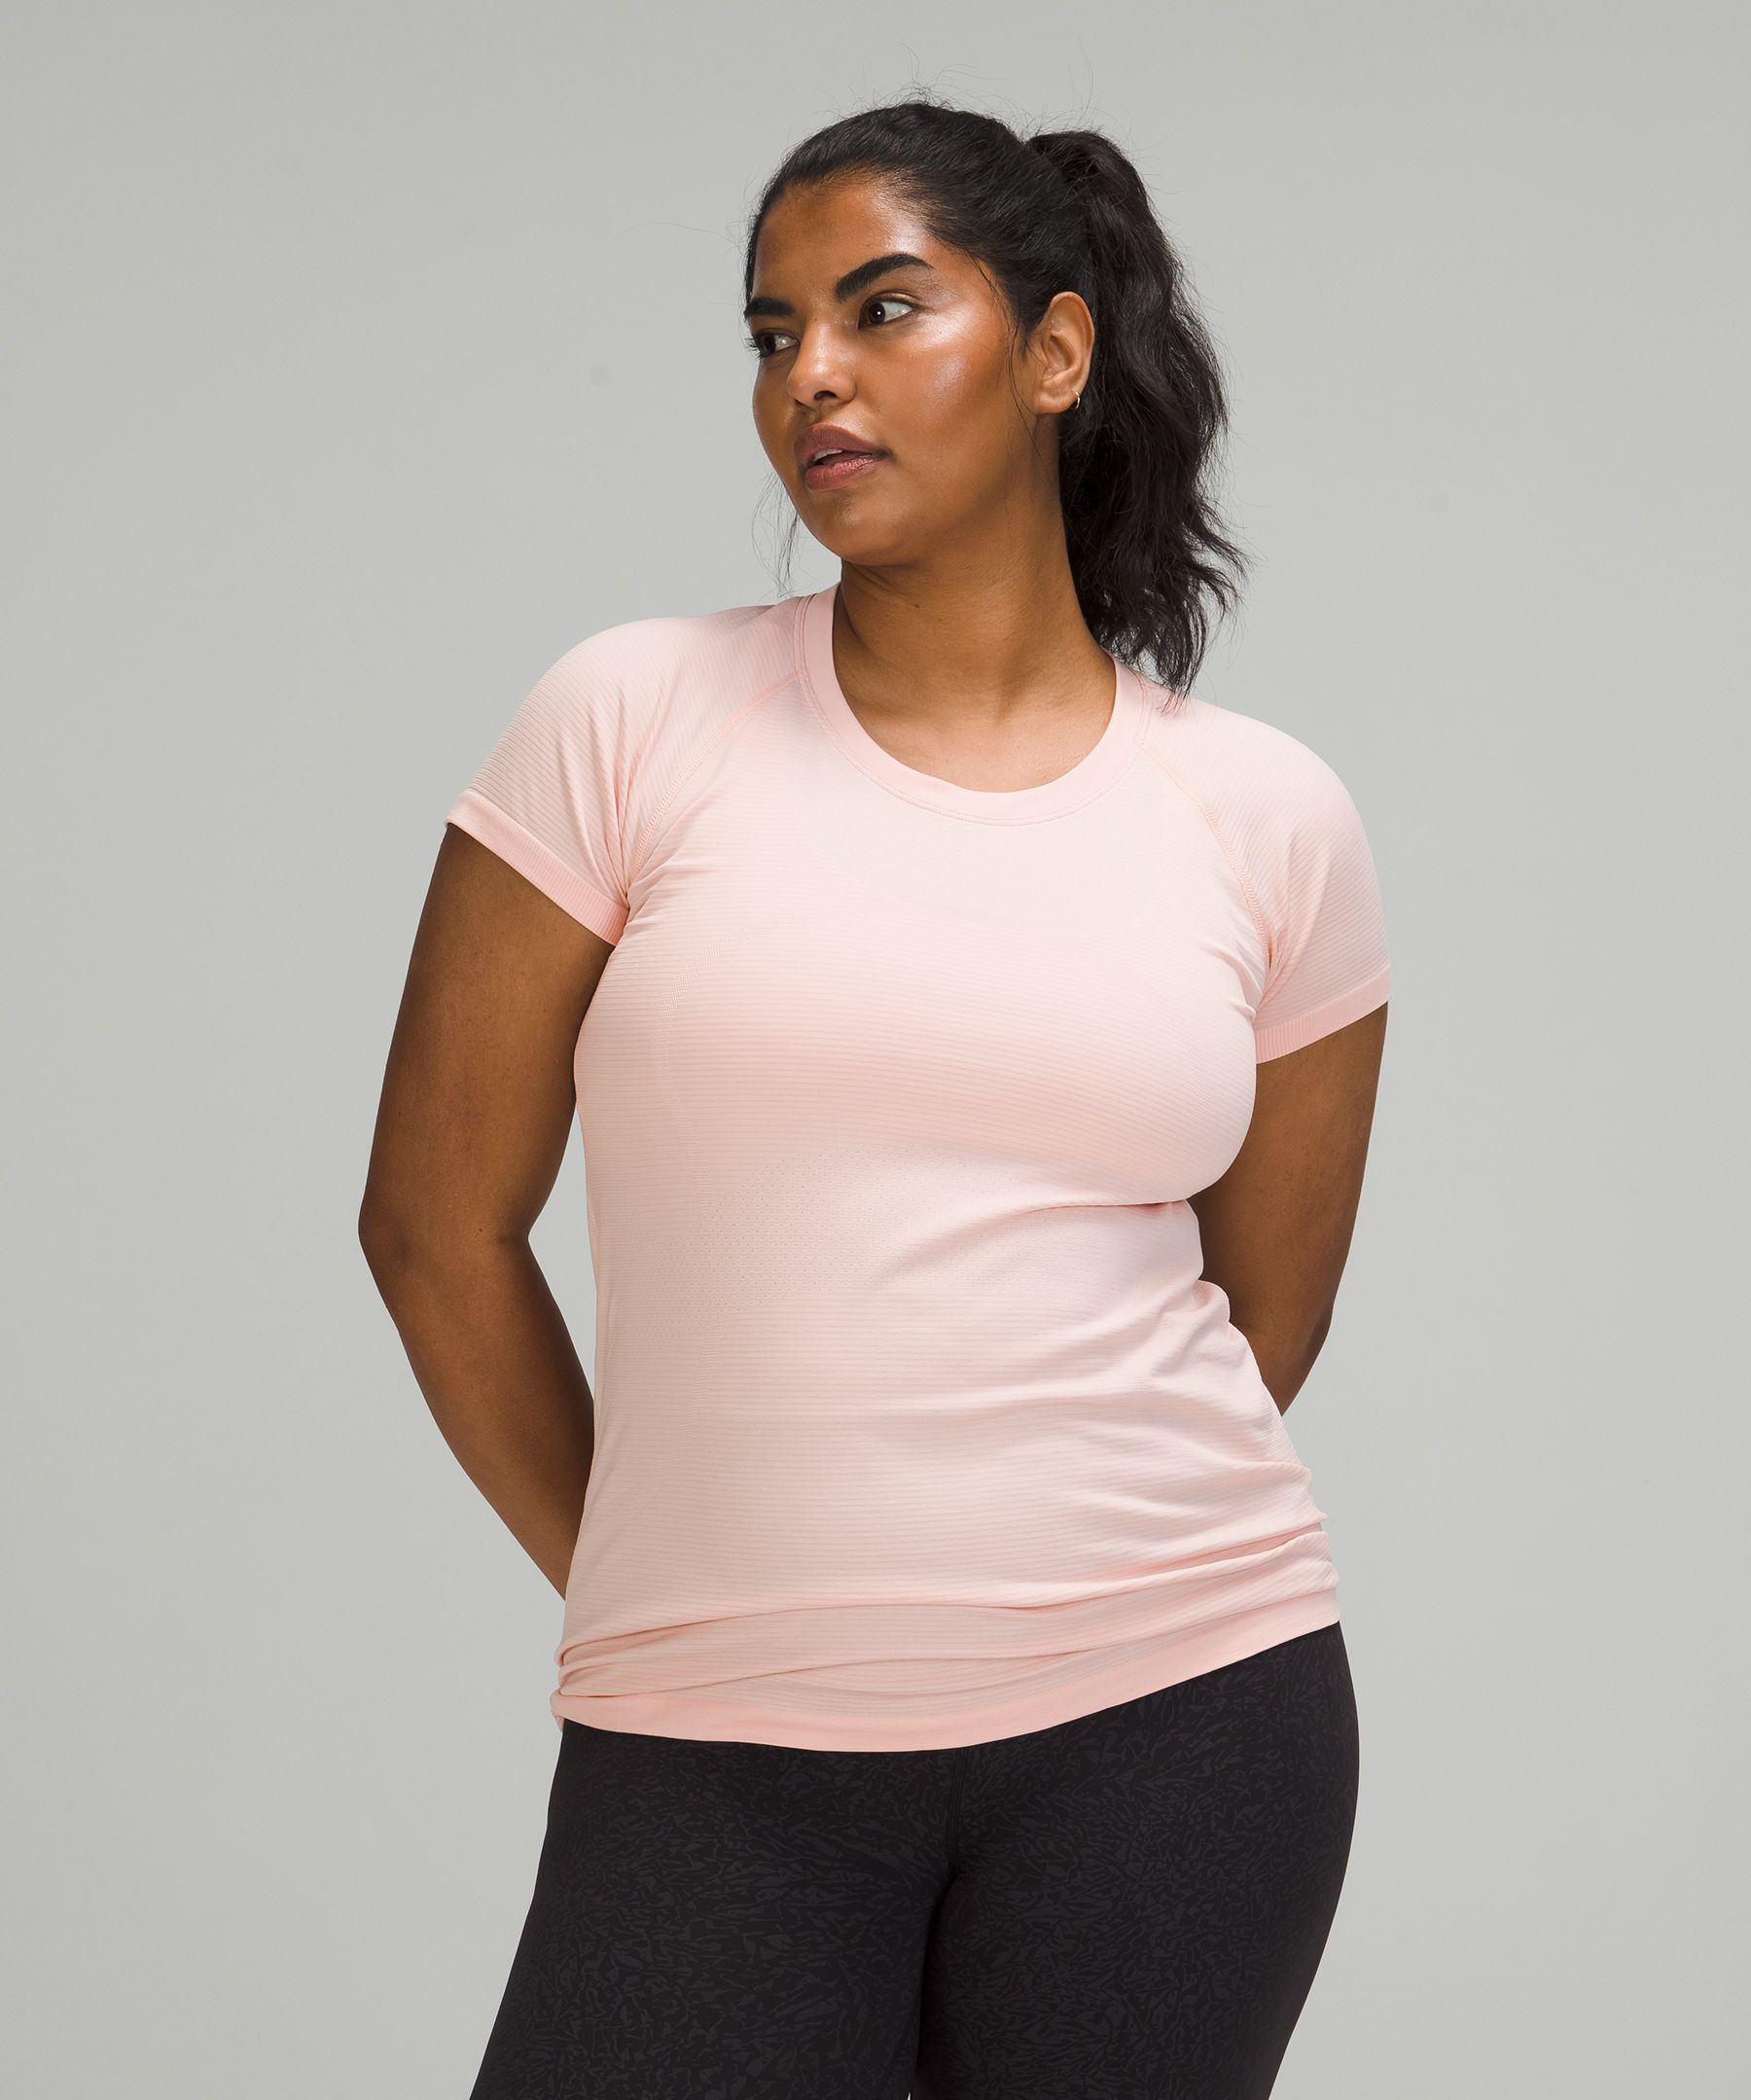 Lululemon Swiftly Tech Short Sleeve Shirt 2.0 In Pink Mist